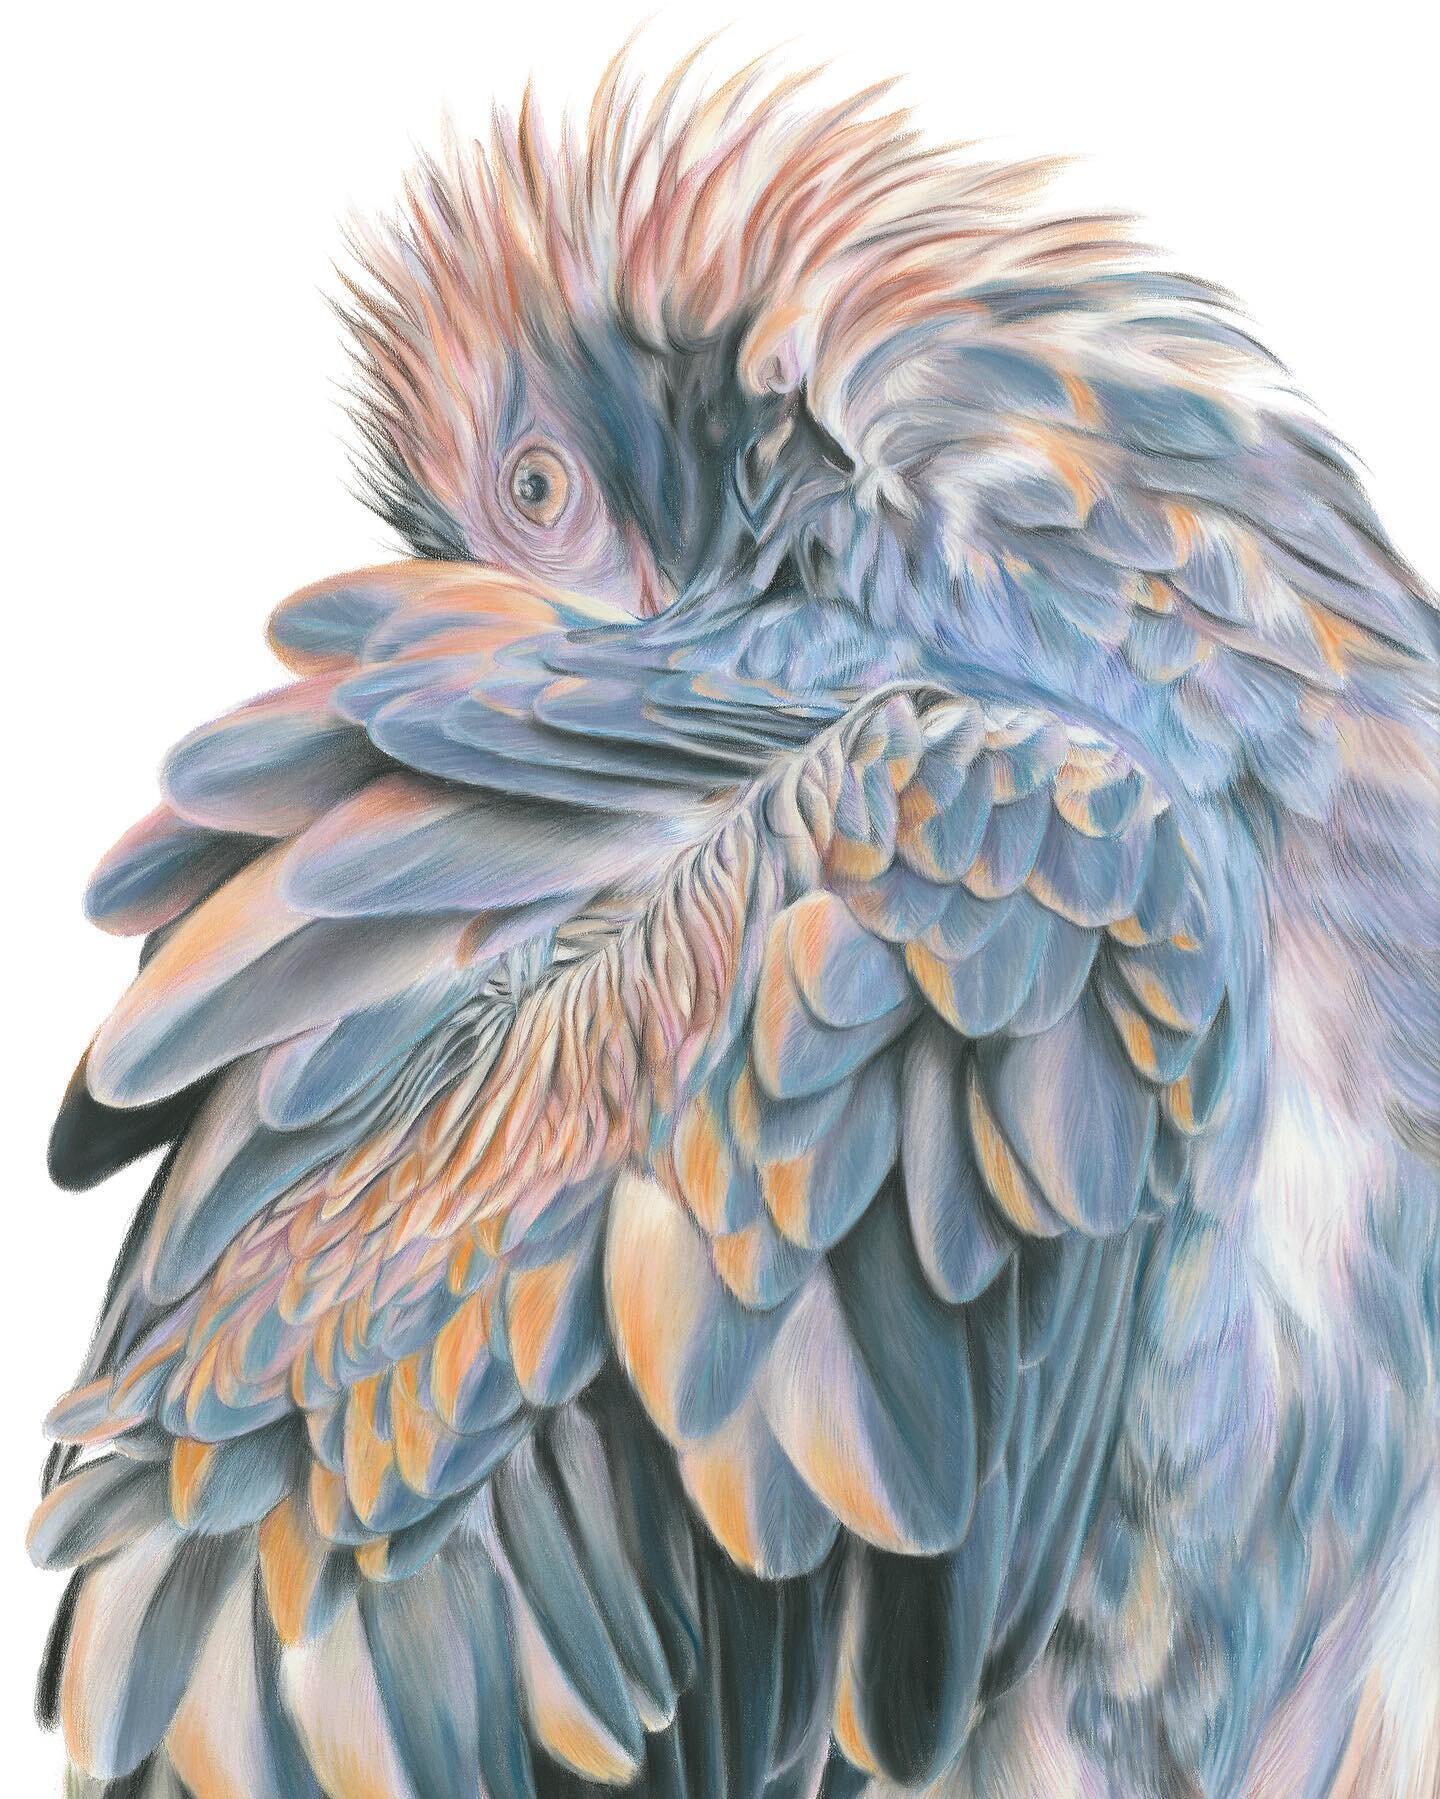 Black breasted buzzard

Pastel on Stonehenge paper

#pastel #drawing #birds #australia